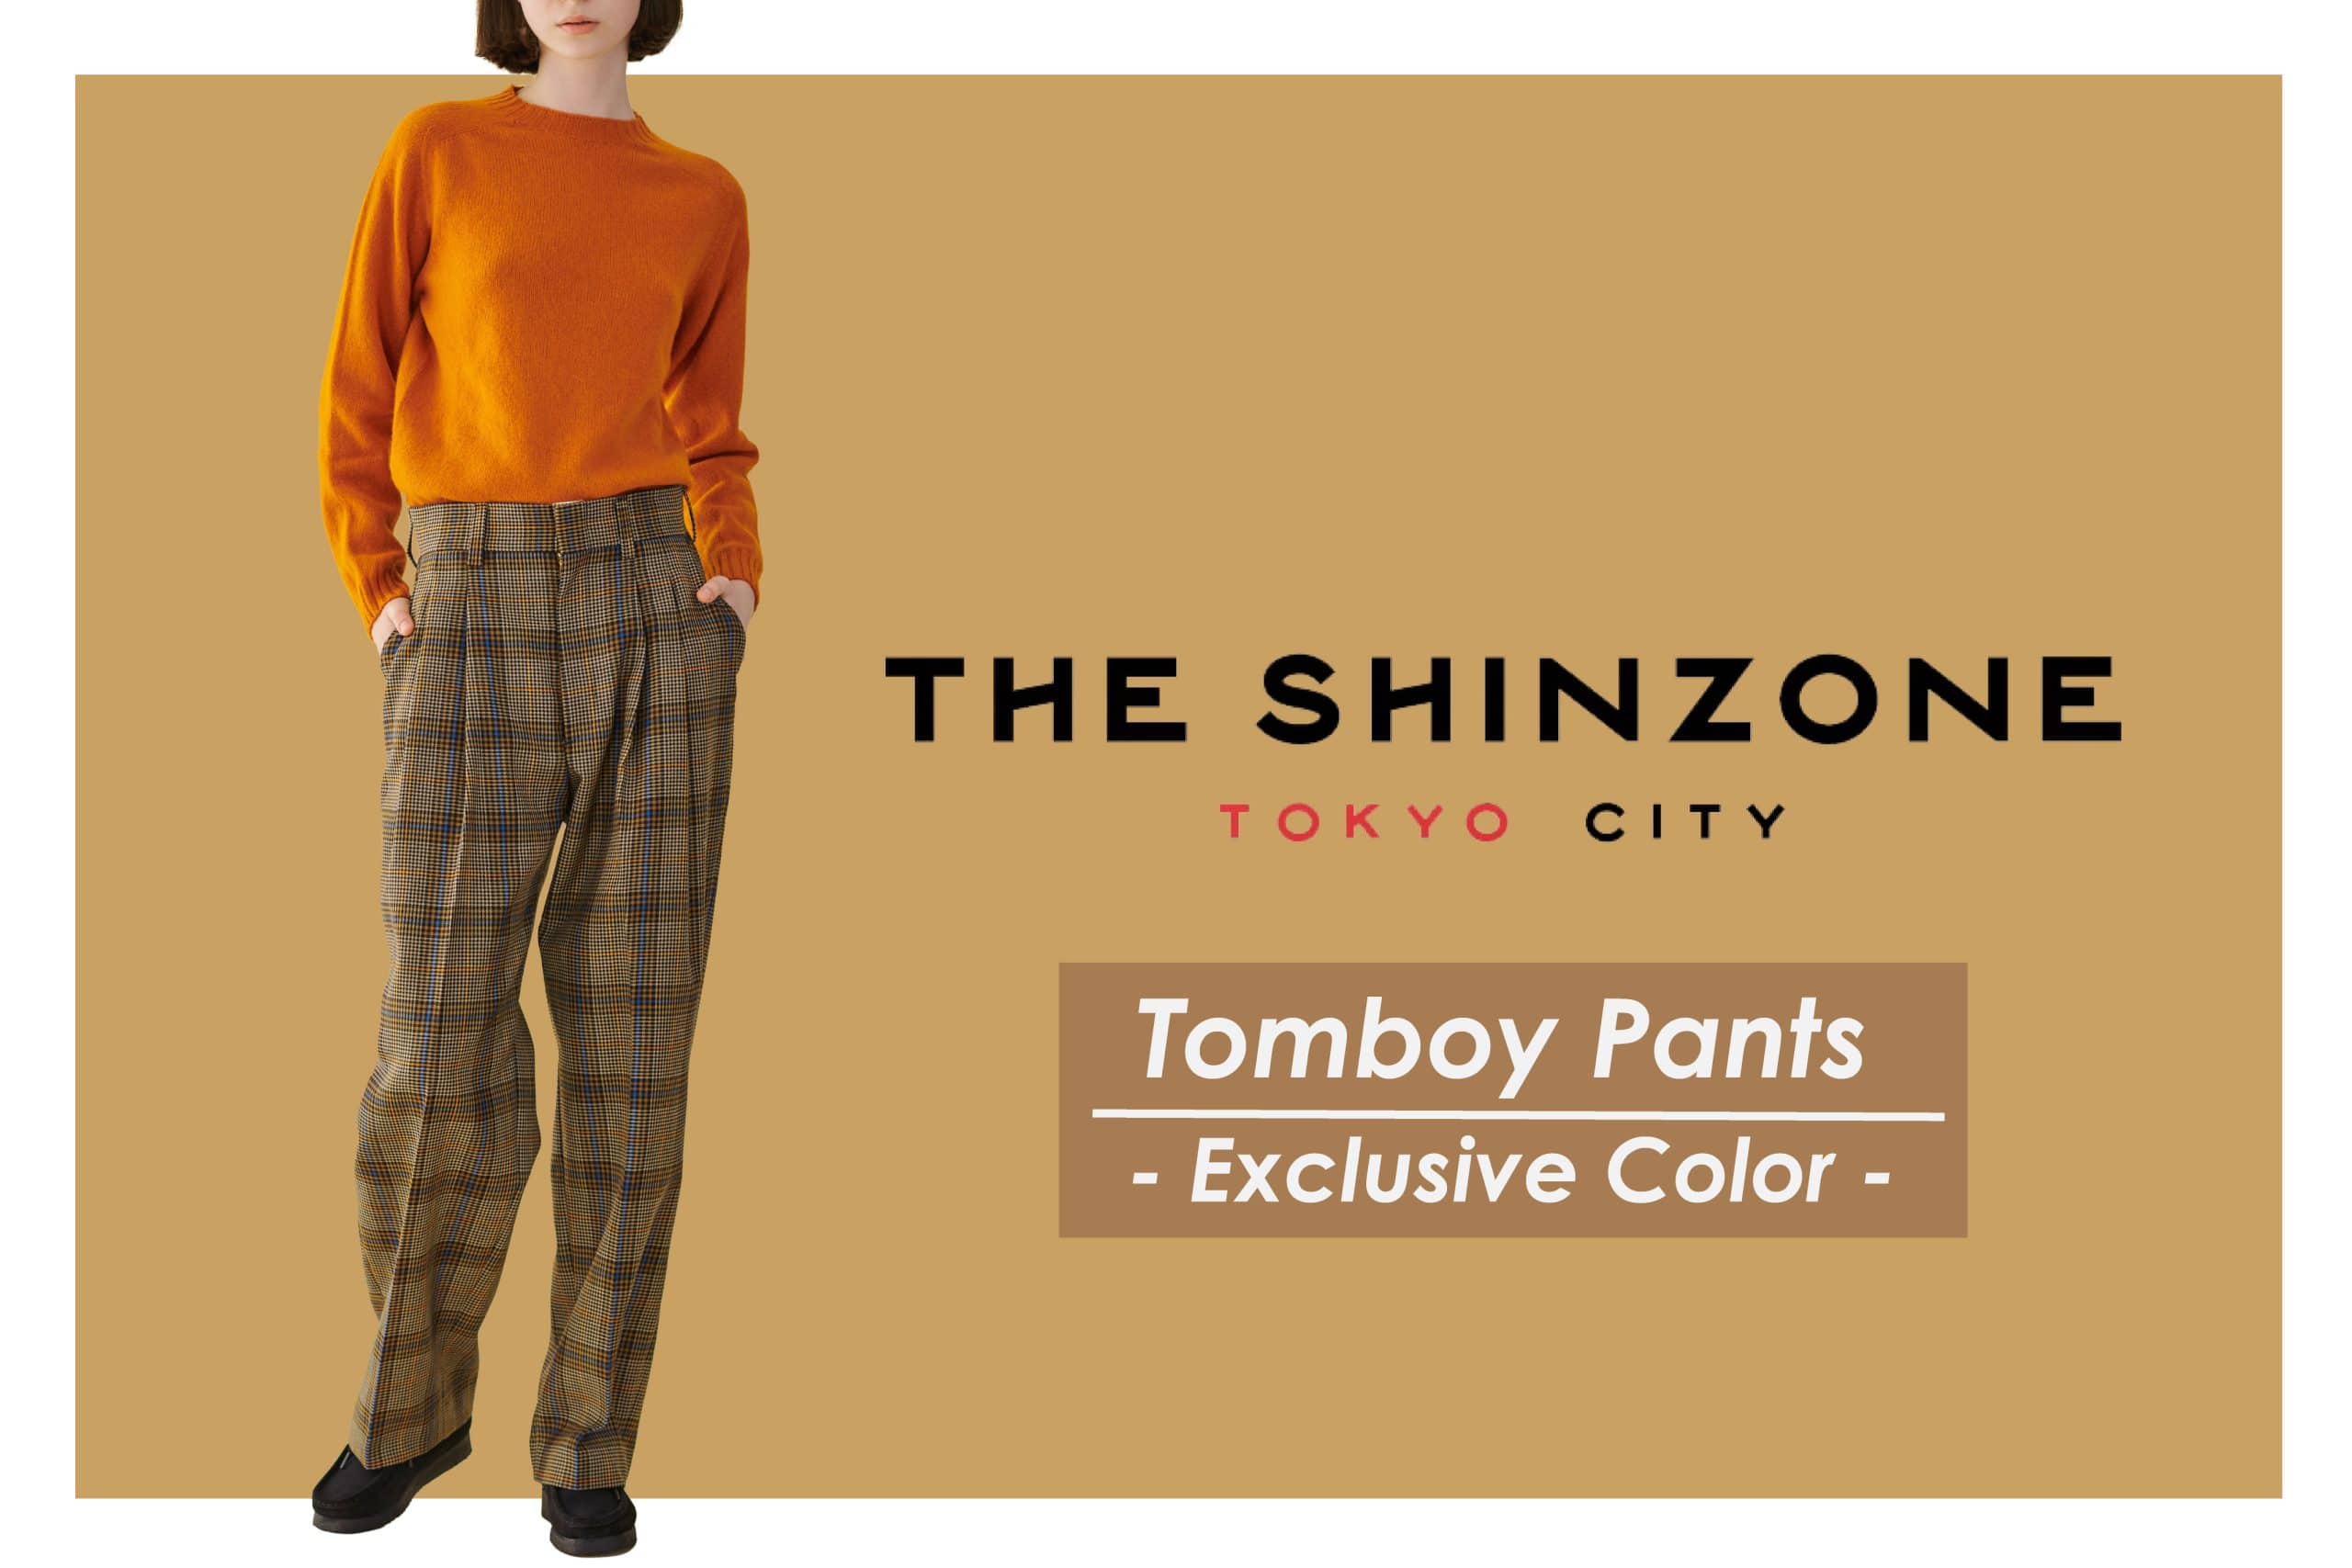 THE SHINZONE - TOMBOY PANTS EXCLUSIVE COLOR